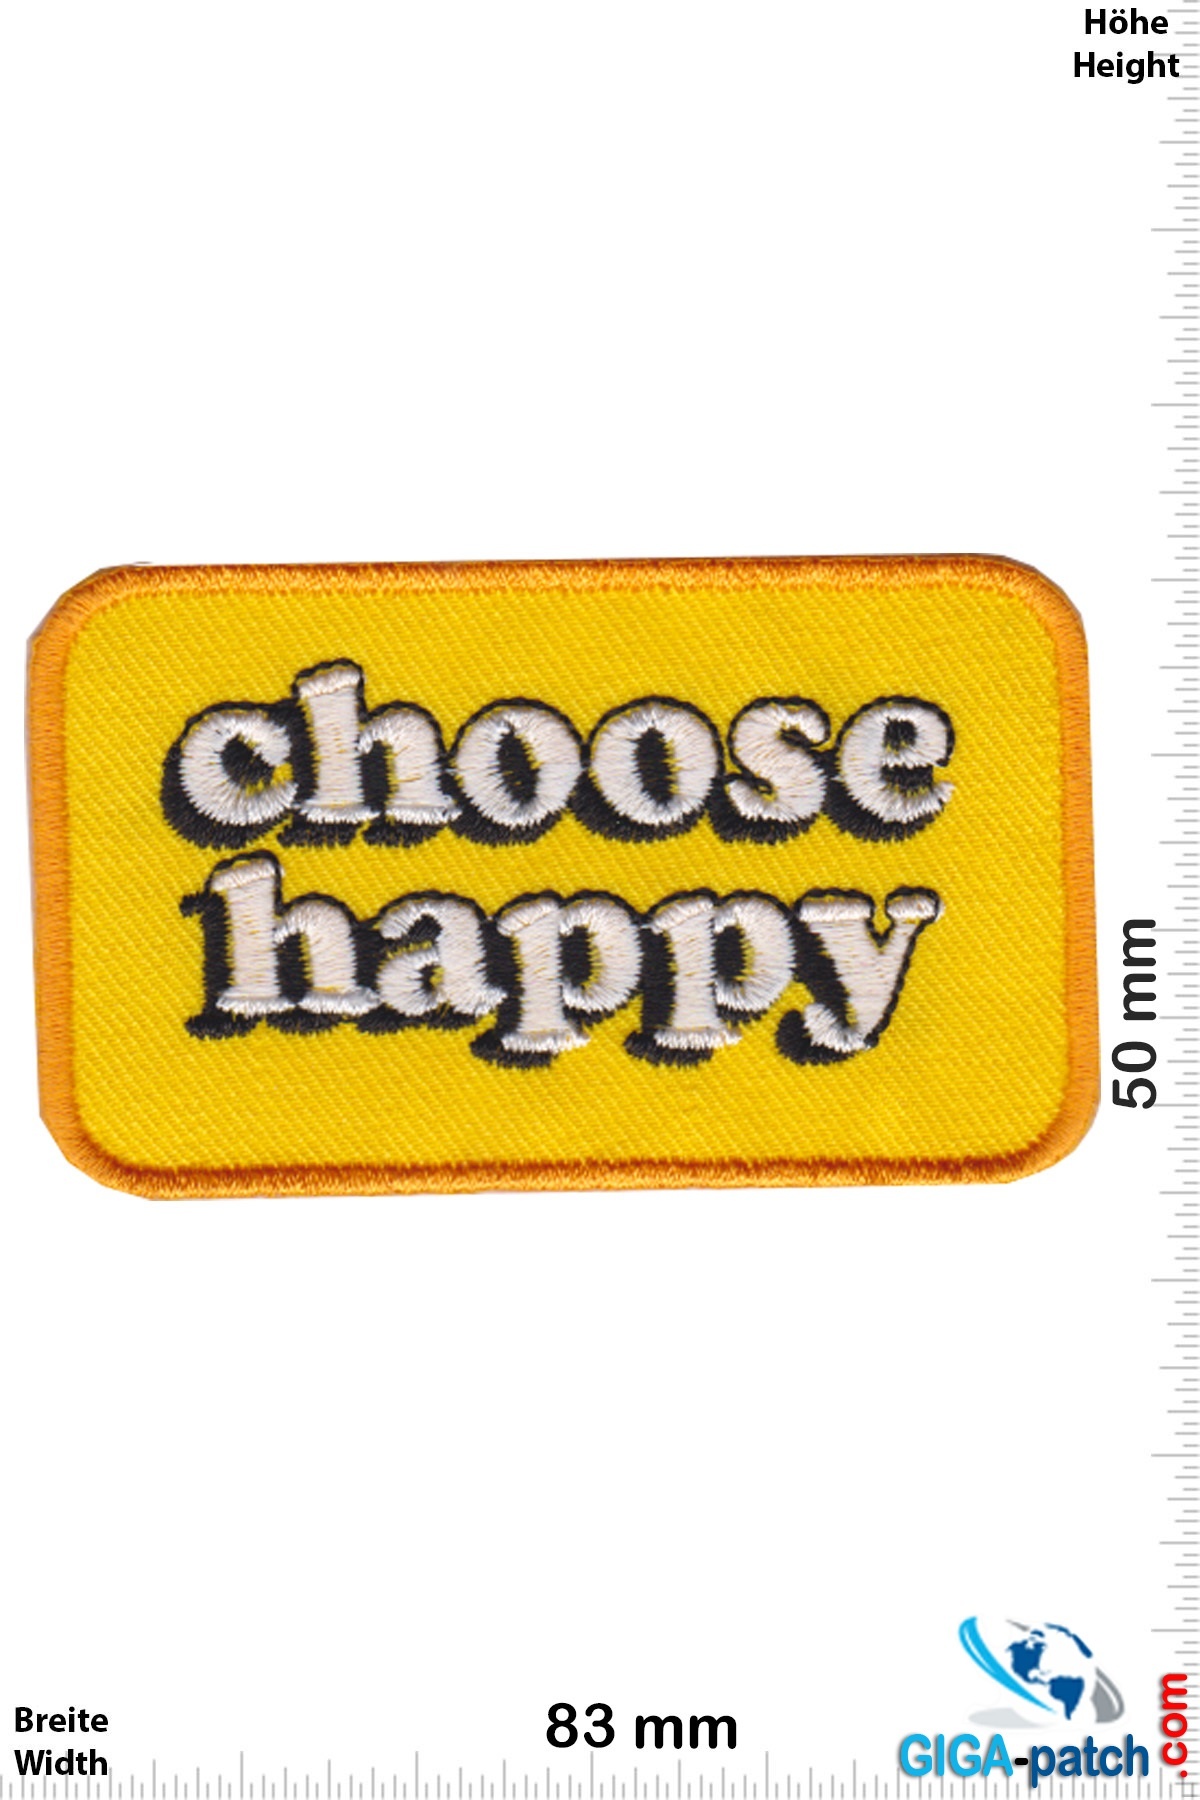 Sprüche, Claims choose happy